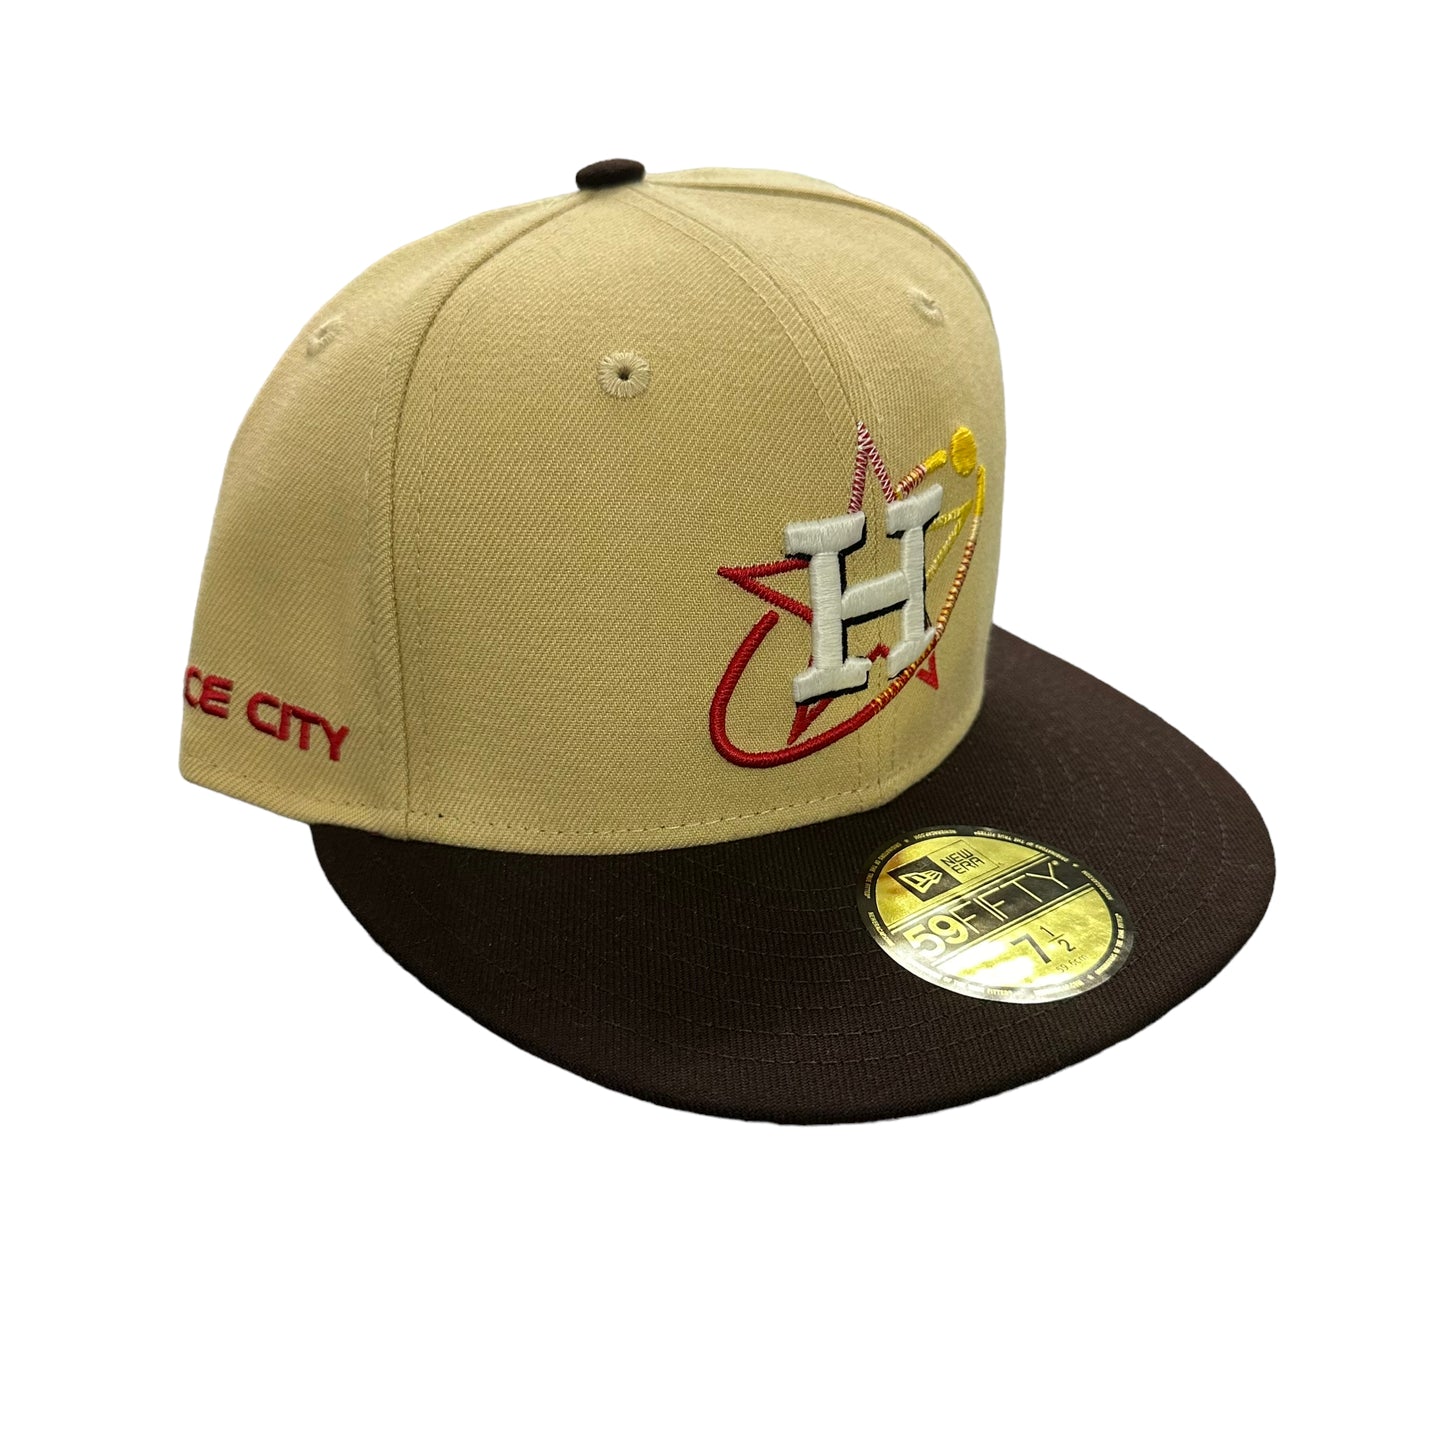 Astros Space City Khaki Hat